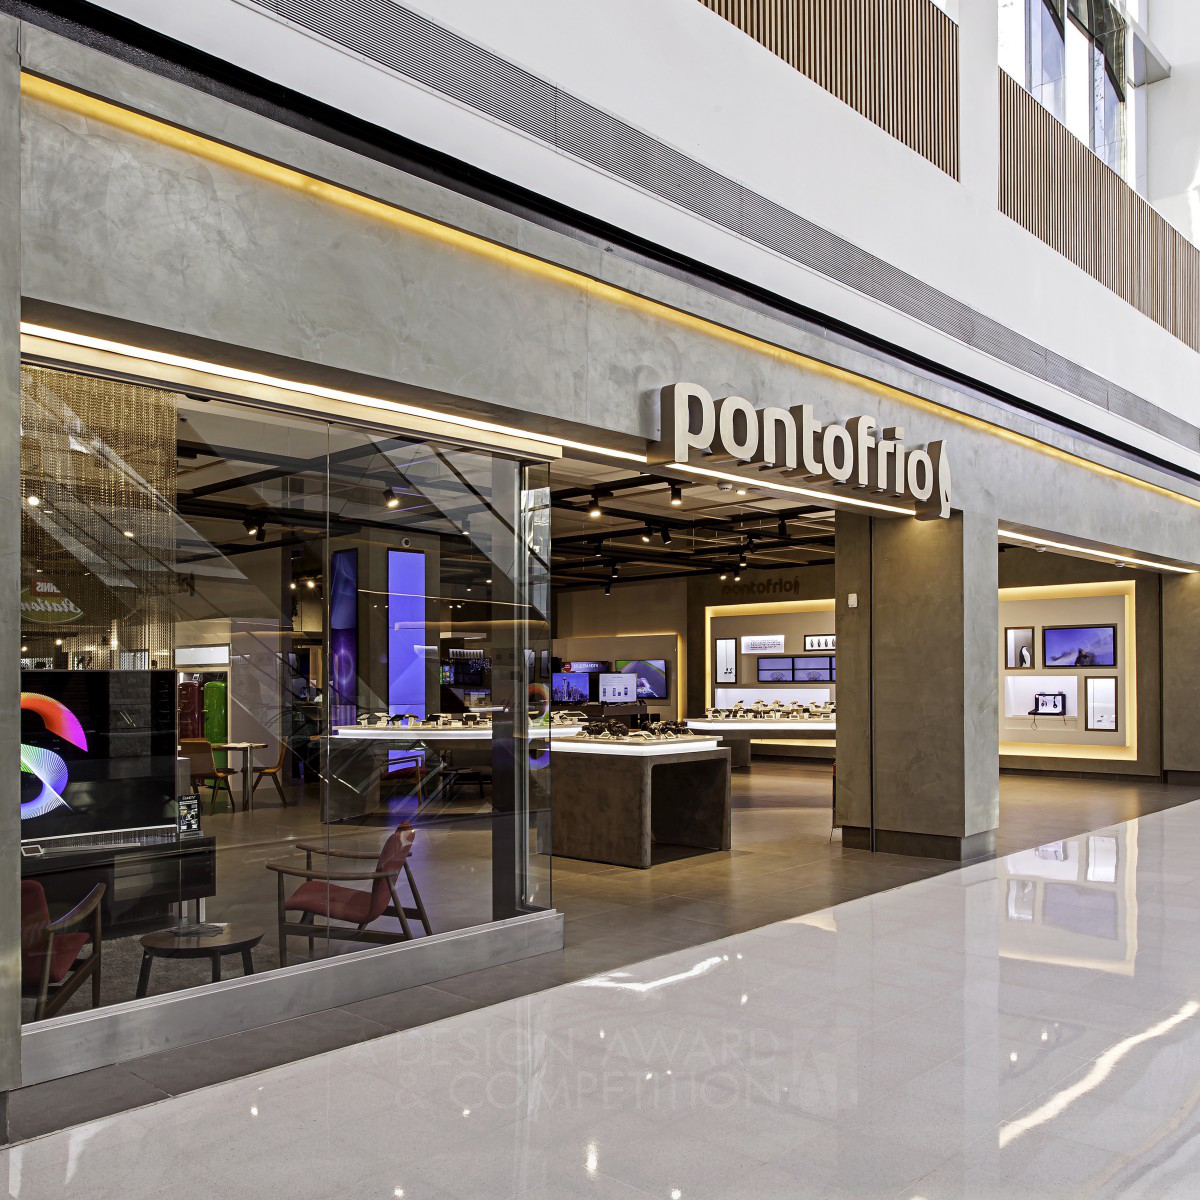 PontofrioPremium Flagship Retail Store by George R. Homer Jr.